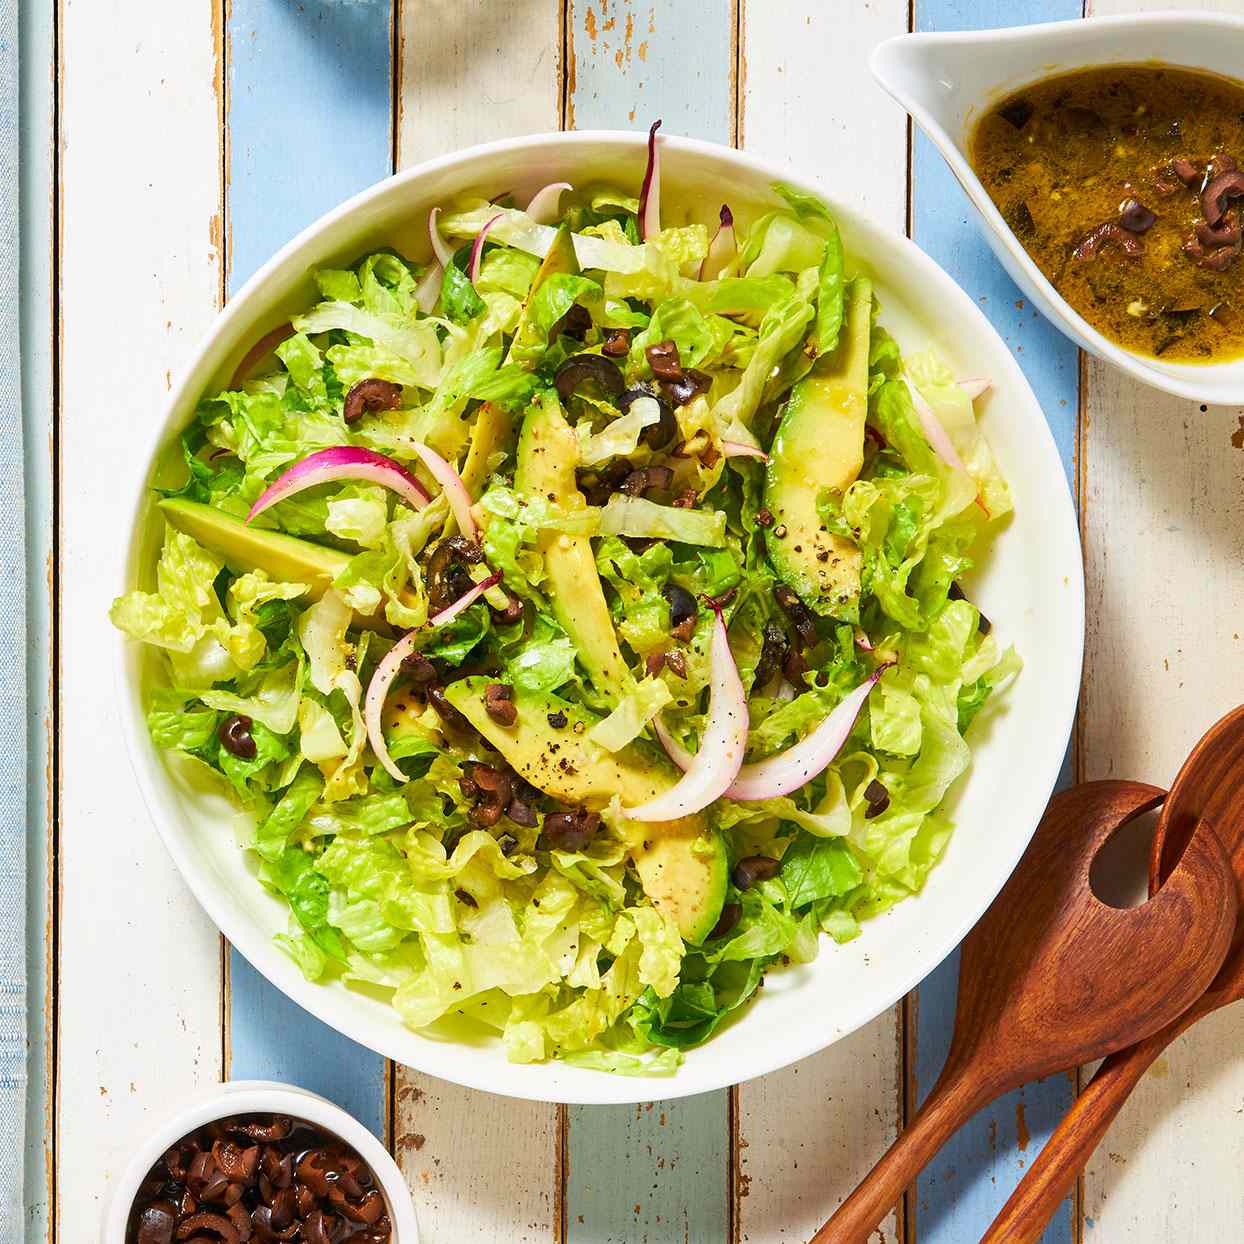 Salad of Avocado & Romaine with Black Olive Dressing